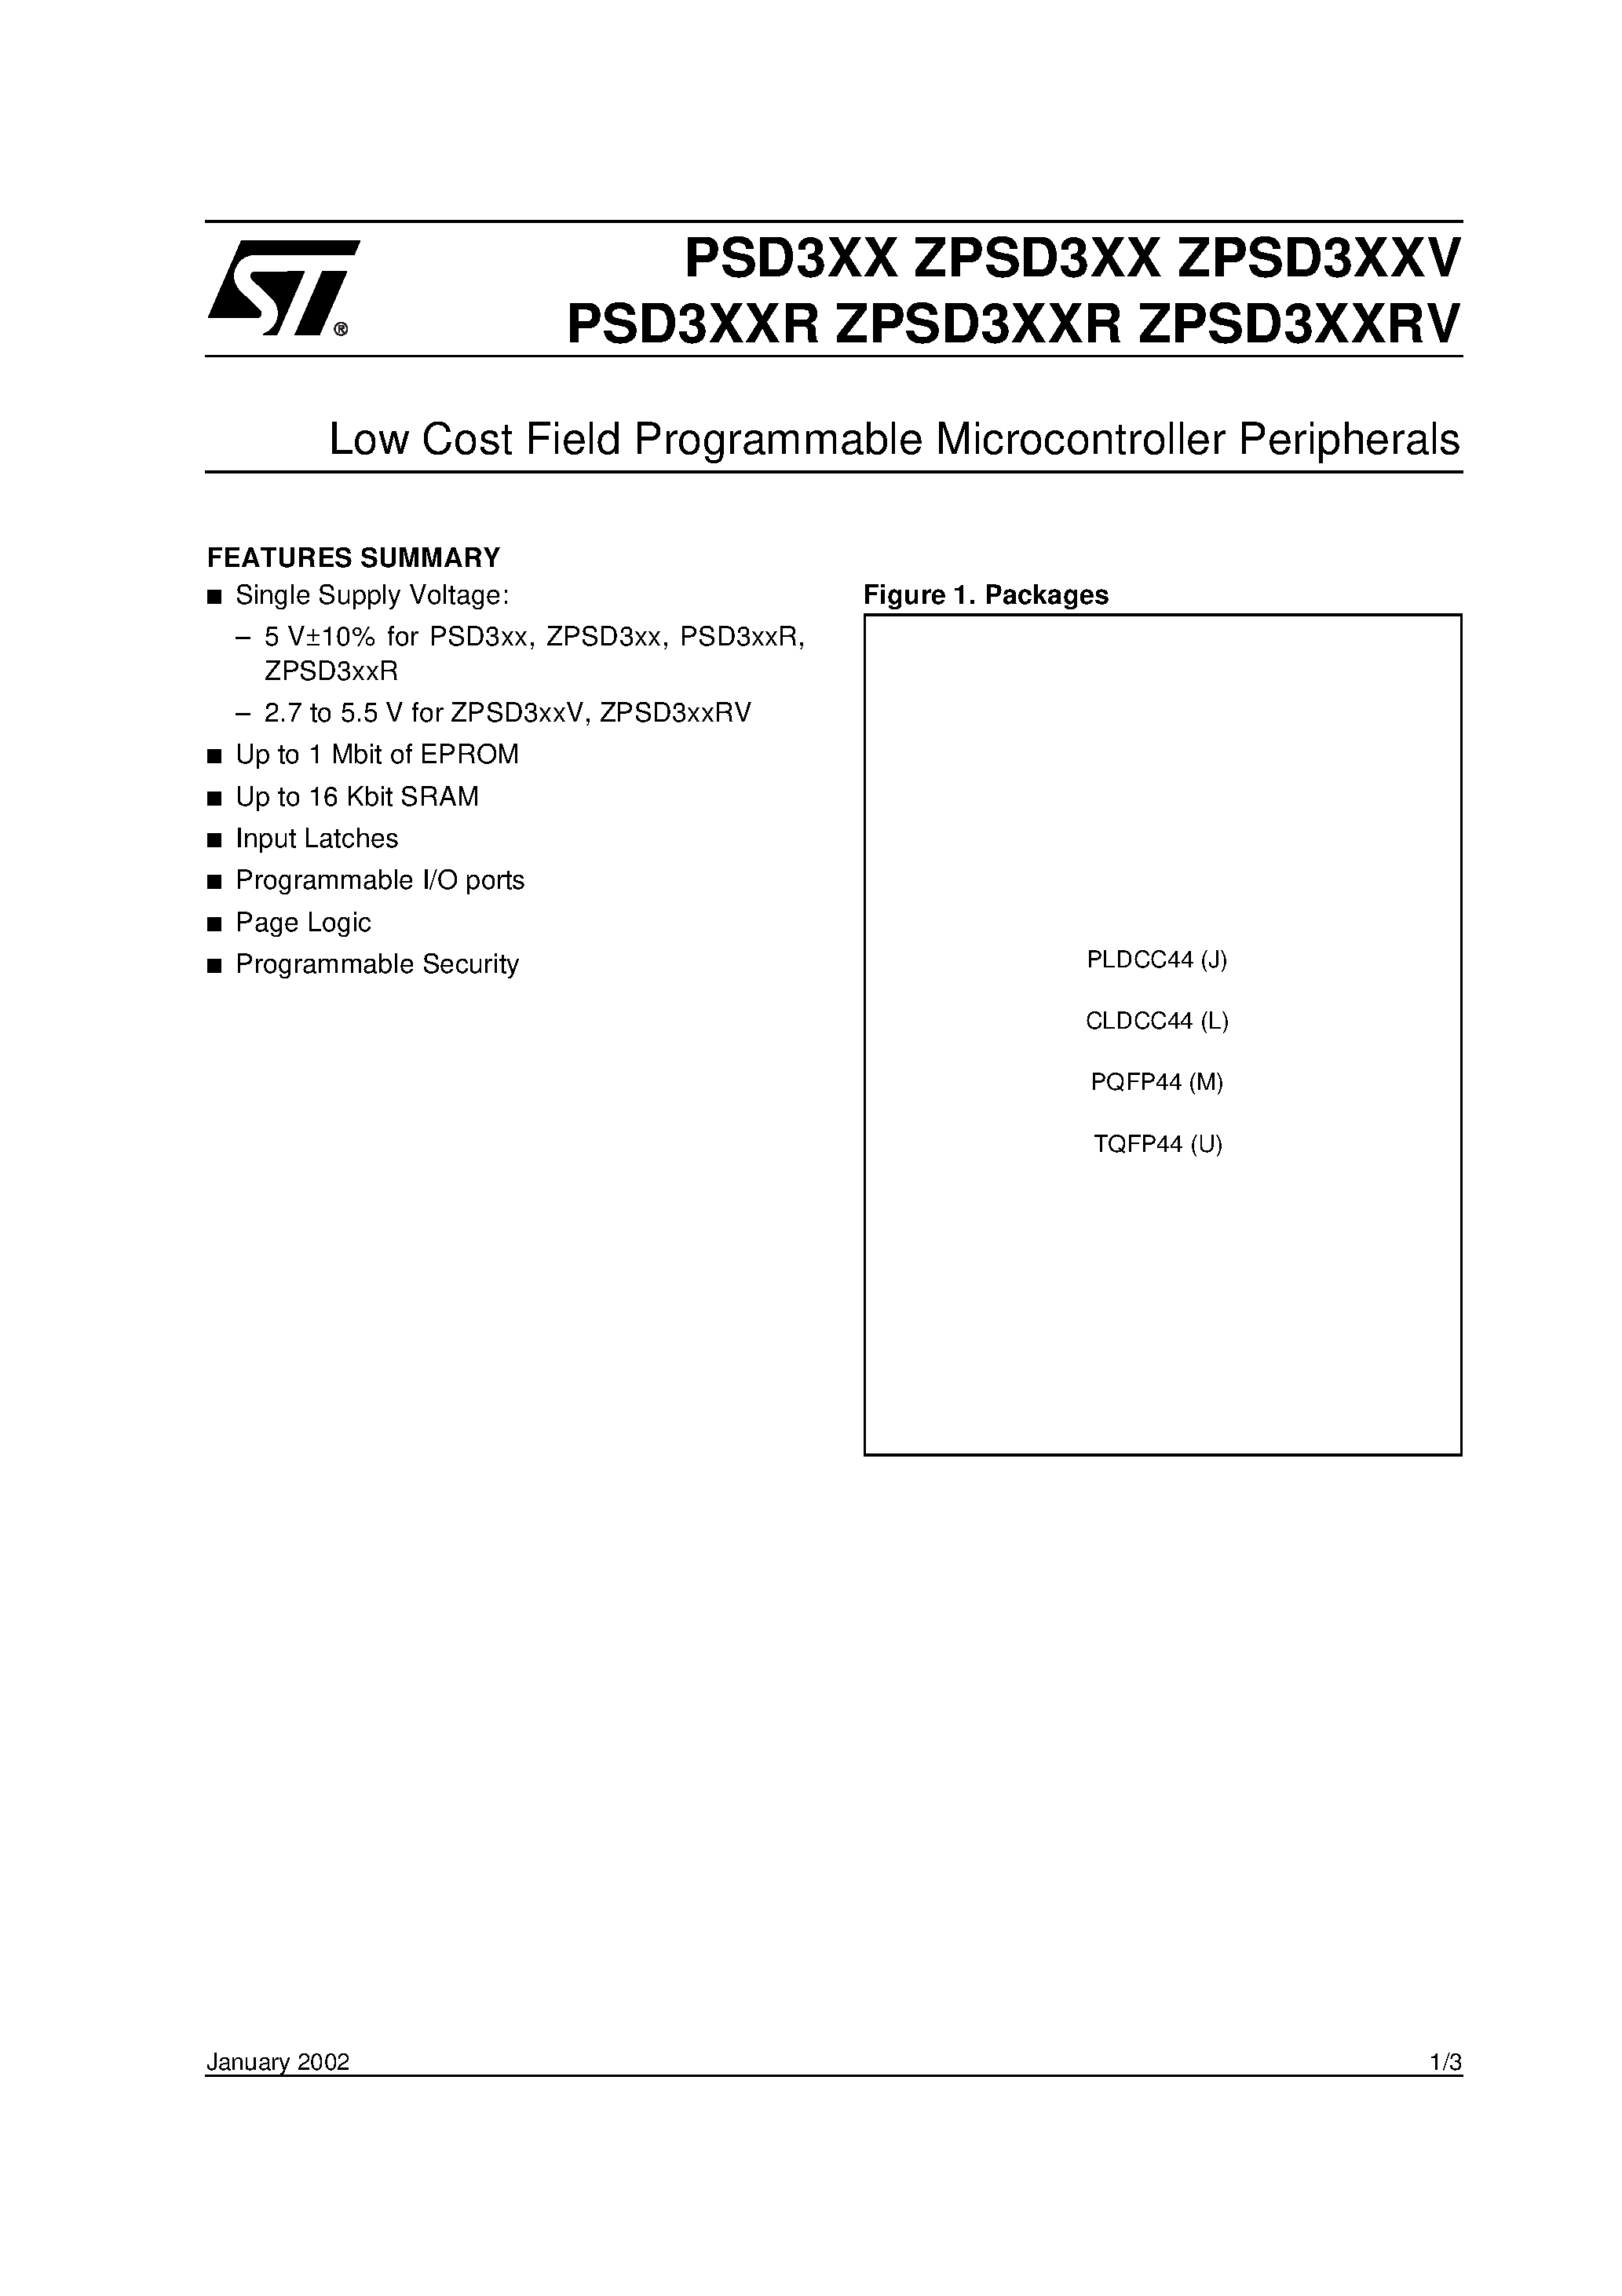 Даташит PSD313-B-90JI - Low Cost Field Programmable Microcontroller Peripherals страница 1